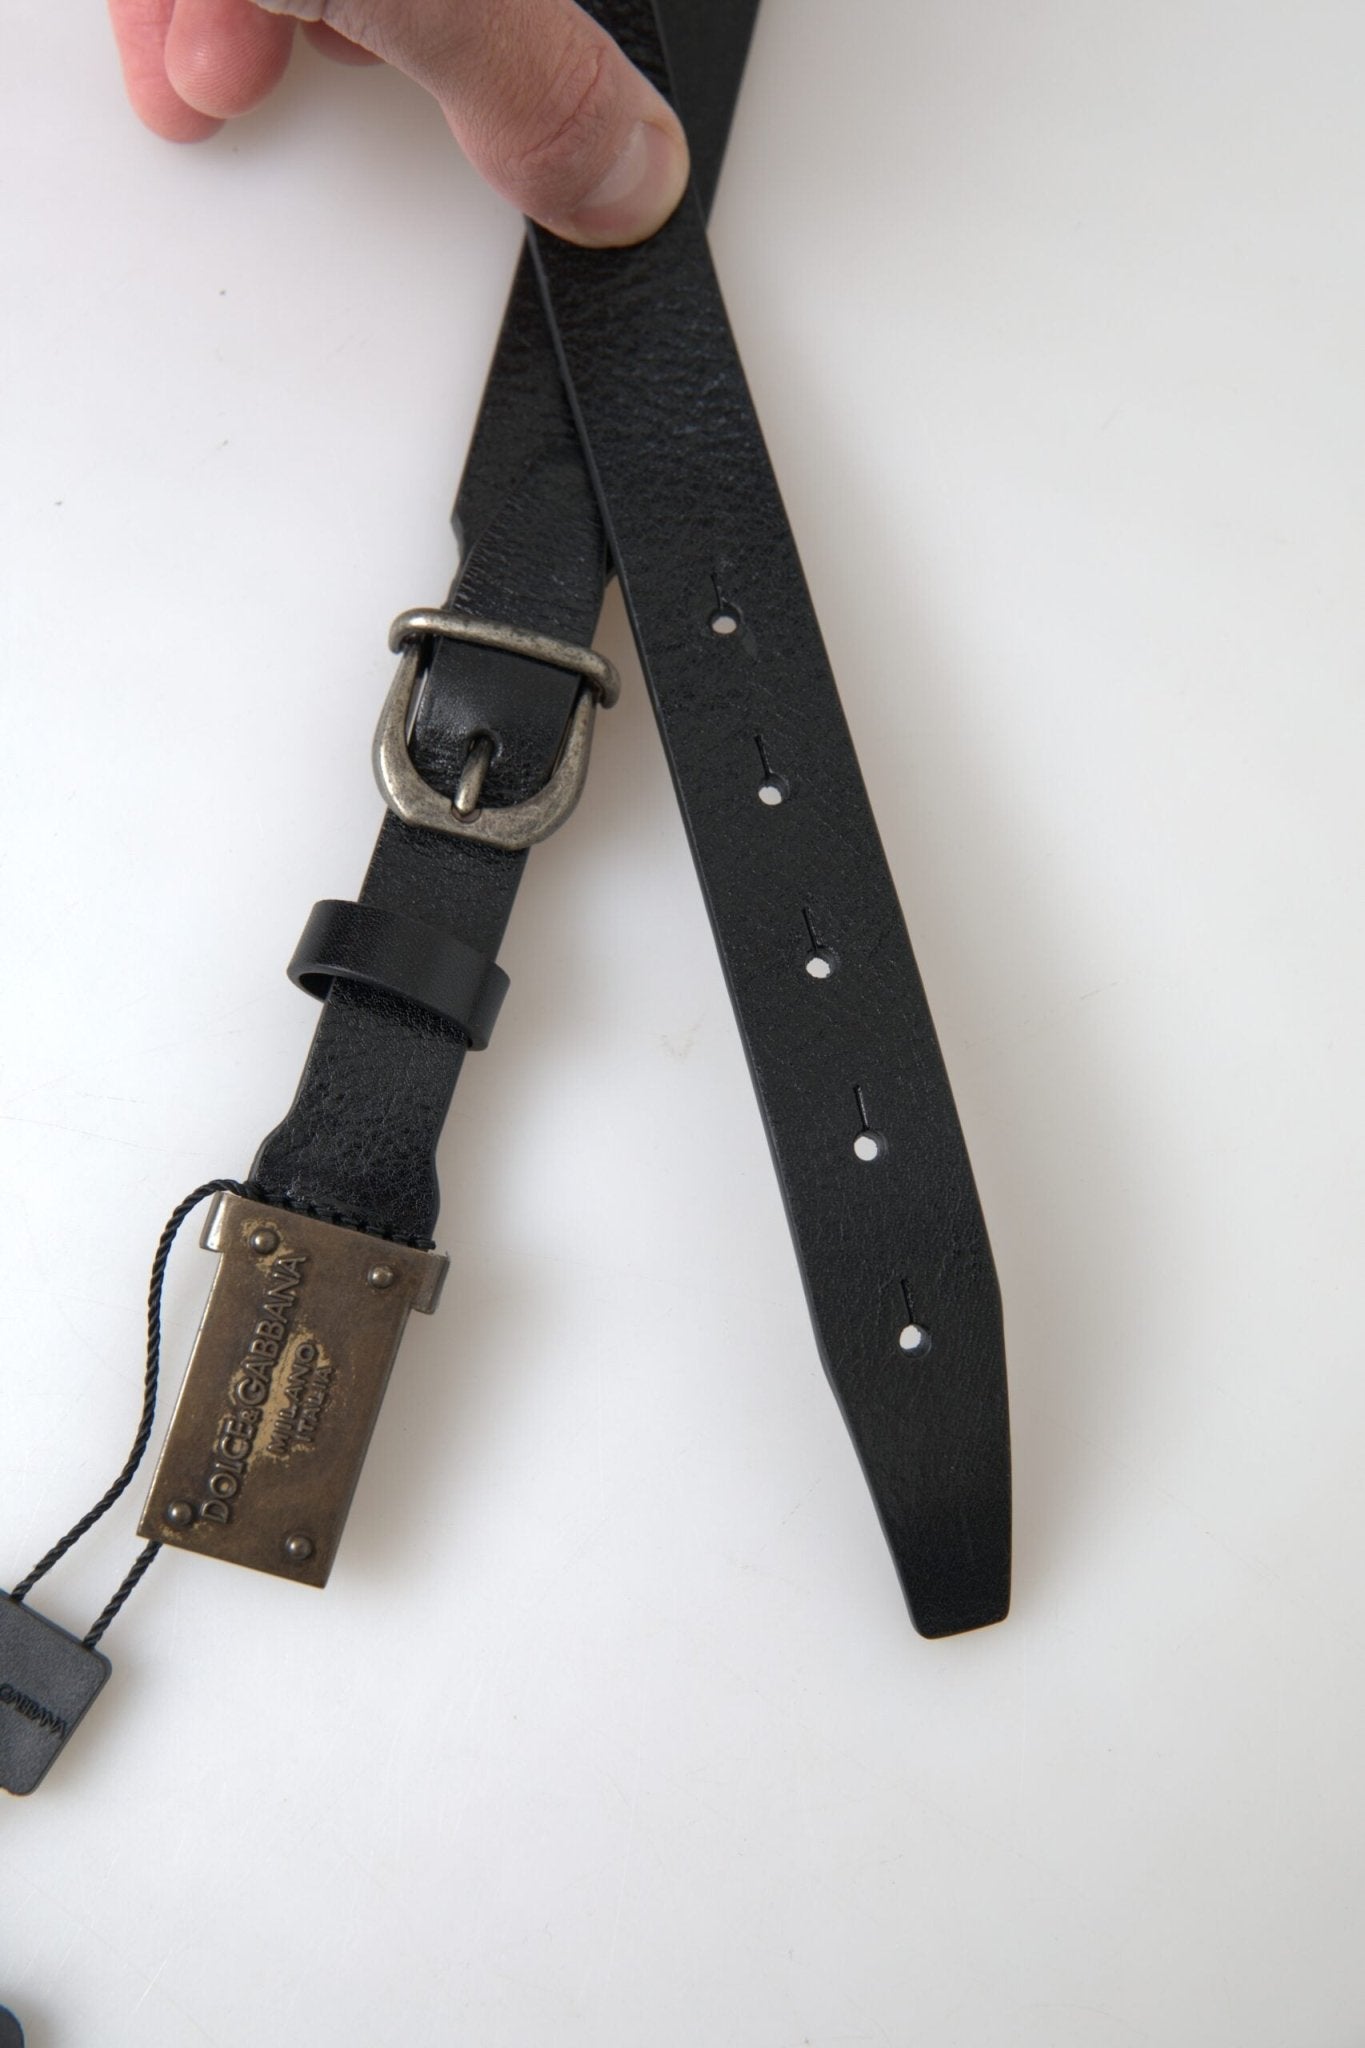 Dolce & Gabbana Elegant Black Leather Belt - Metal Buckle Closure